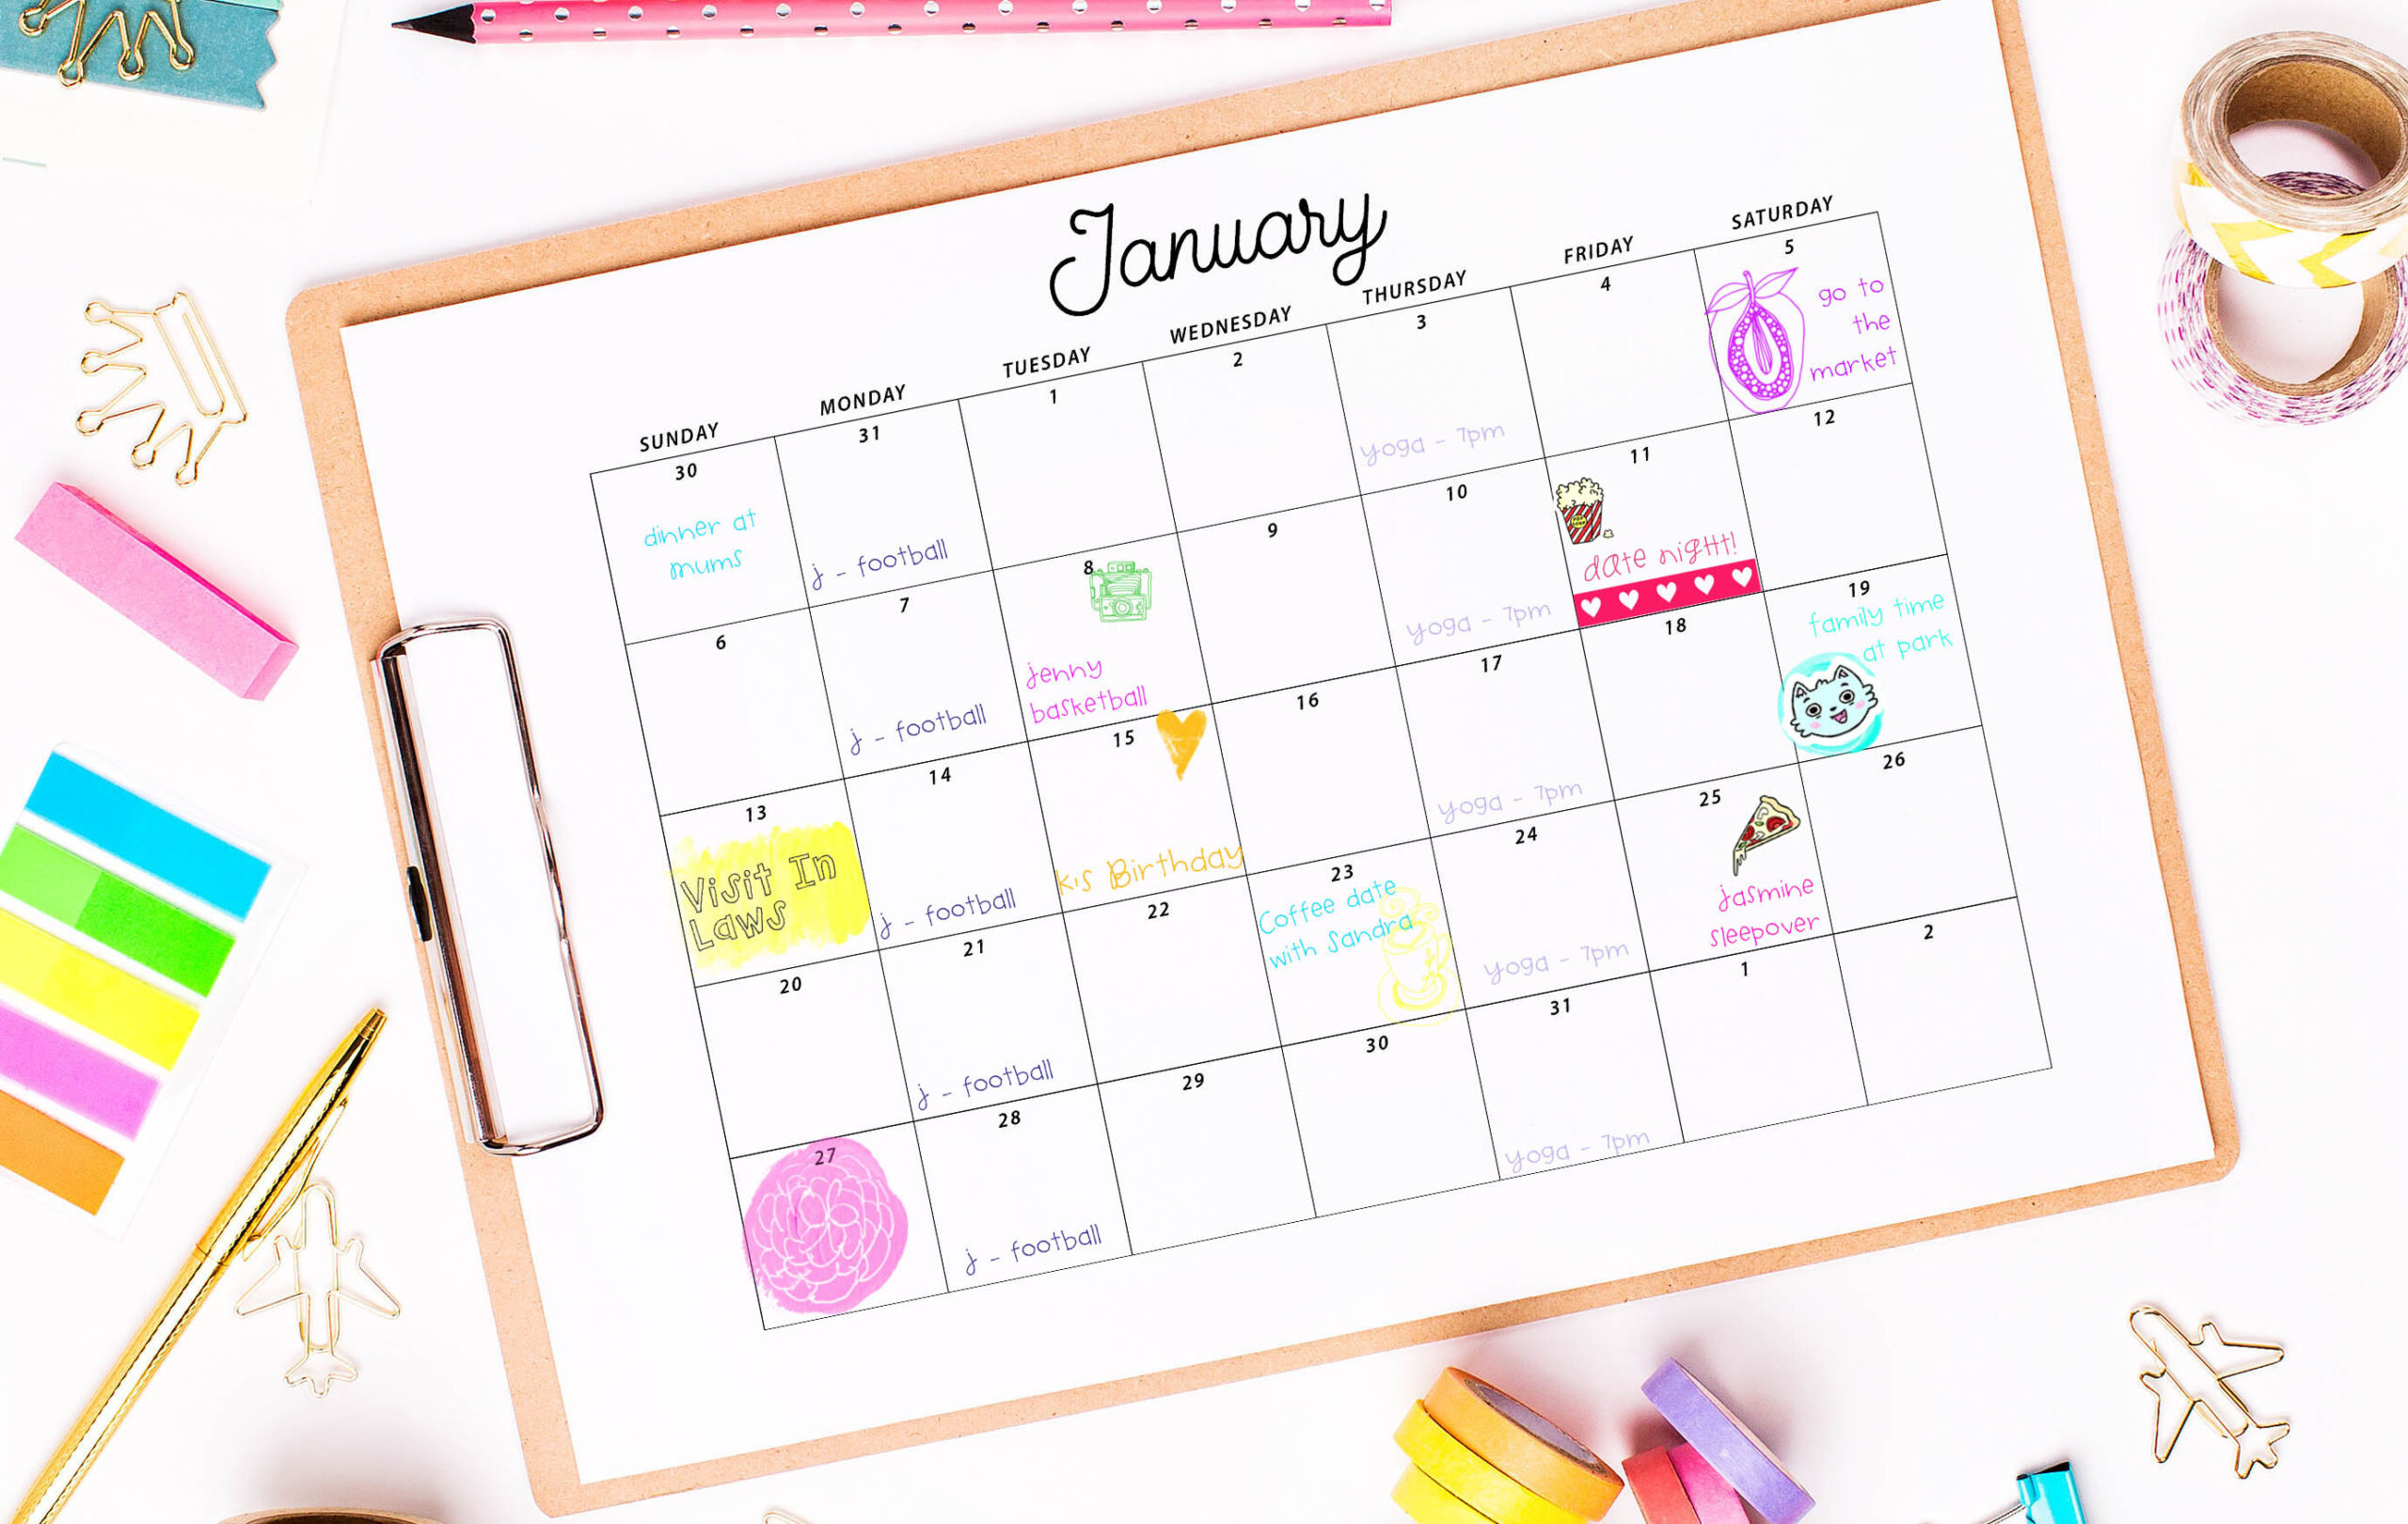 Effective planner system - colour coding calendar